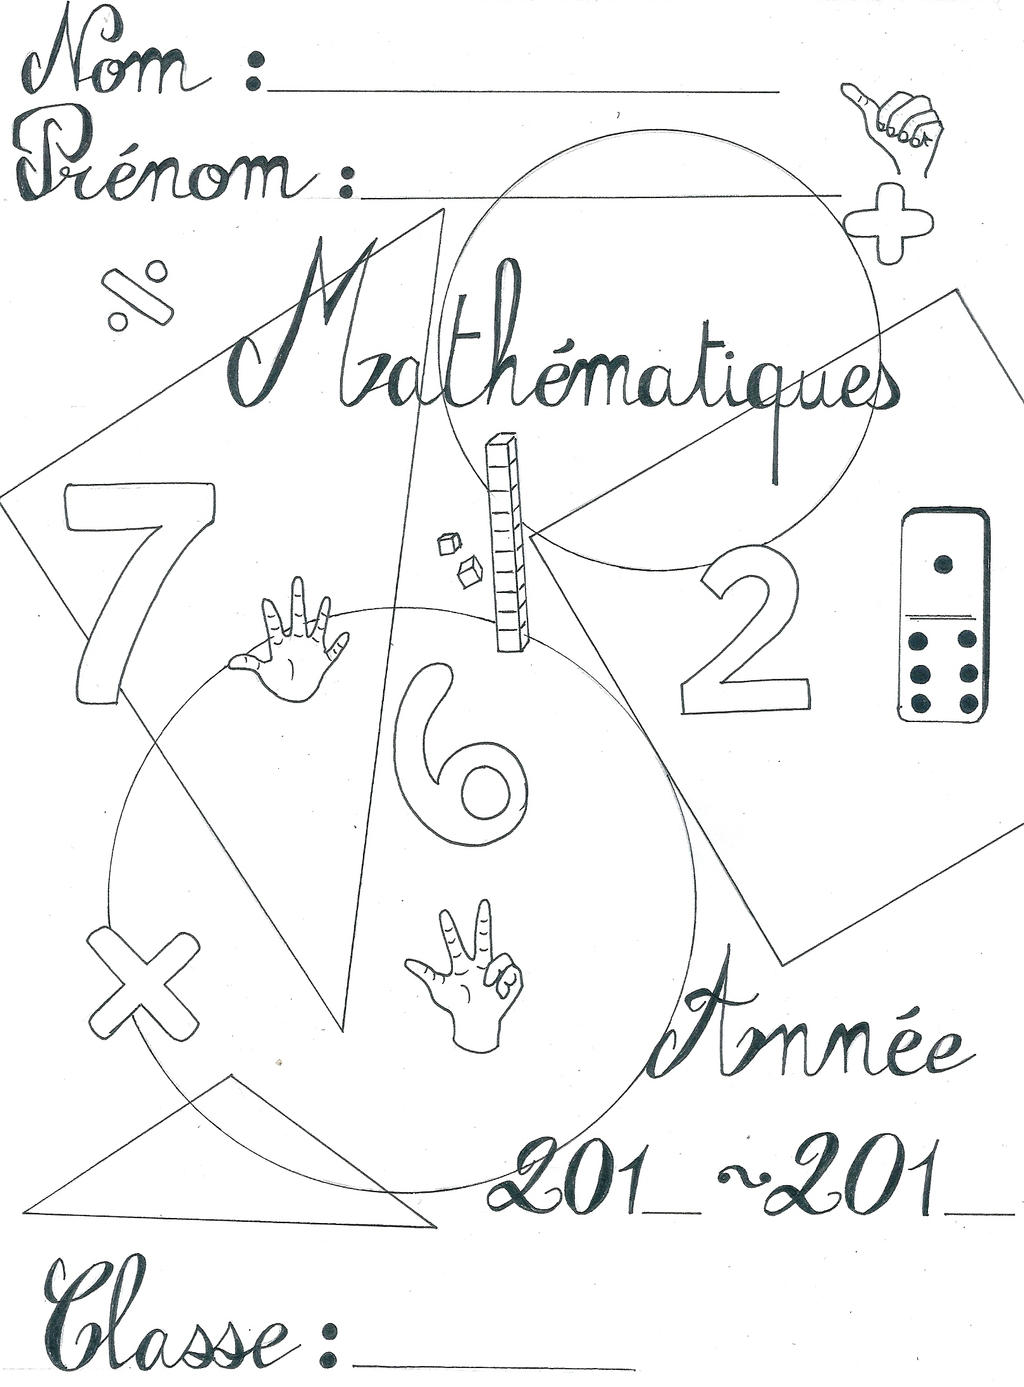 Mathematique Page De Garde Page De Garde Maths by Nimidias on DeviantArt